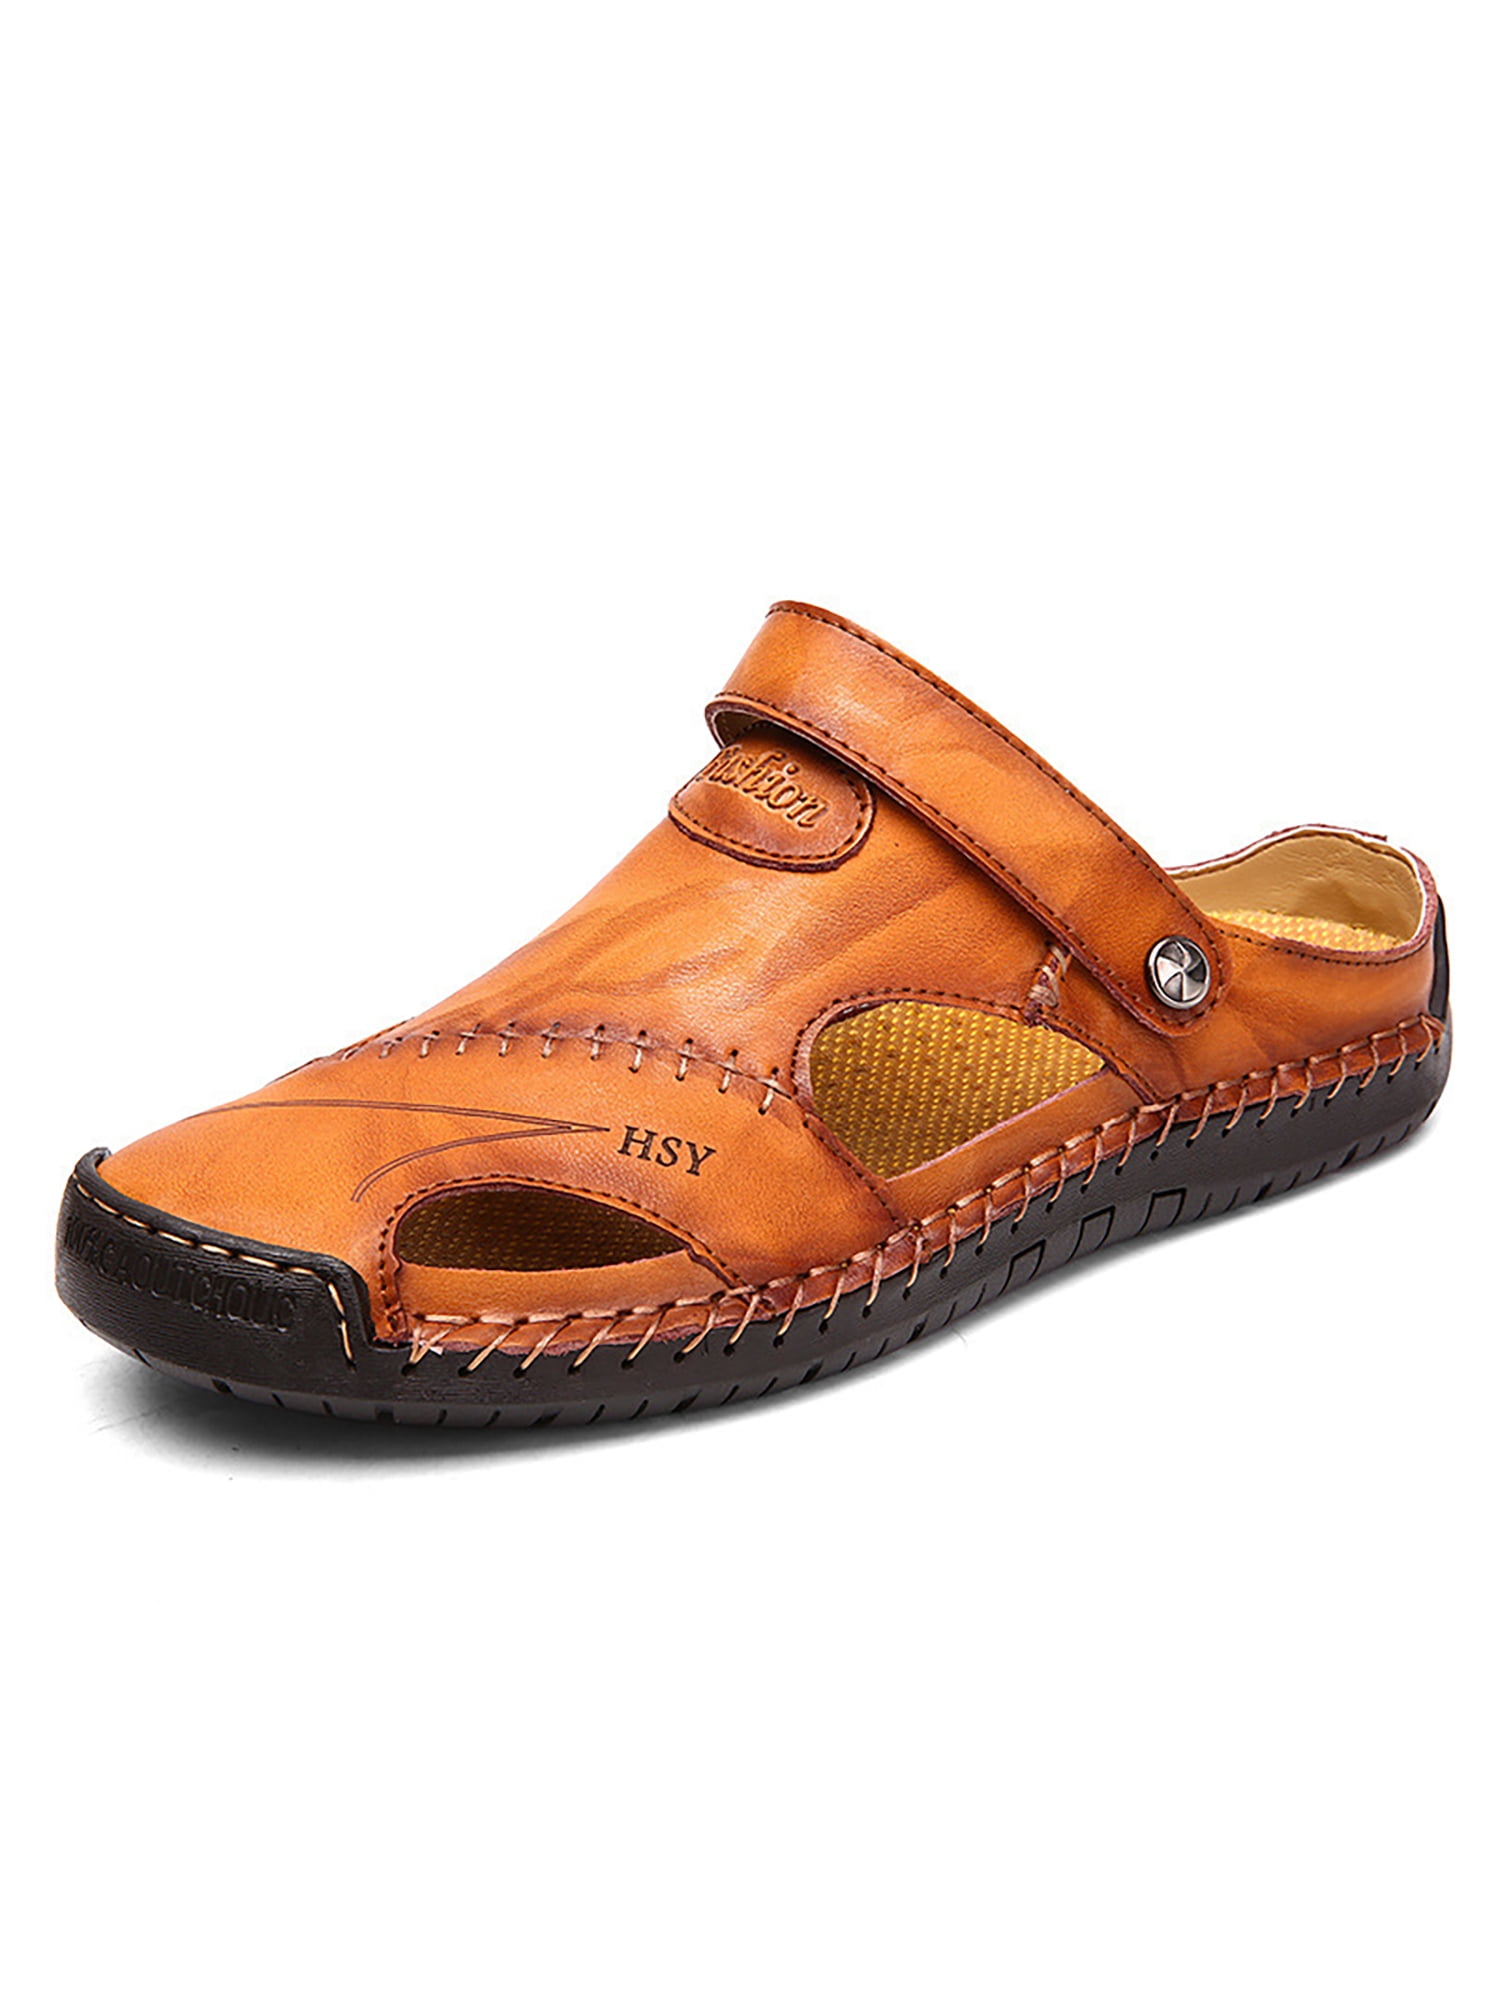 Men's Summer PU Leather Sandals Casual Non-slip Beach Roman Slipper Shoes New 